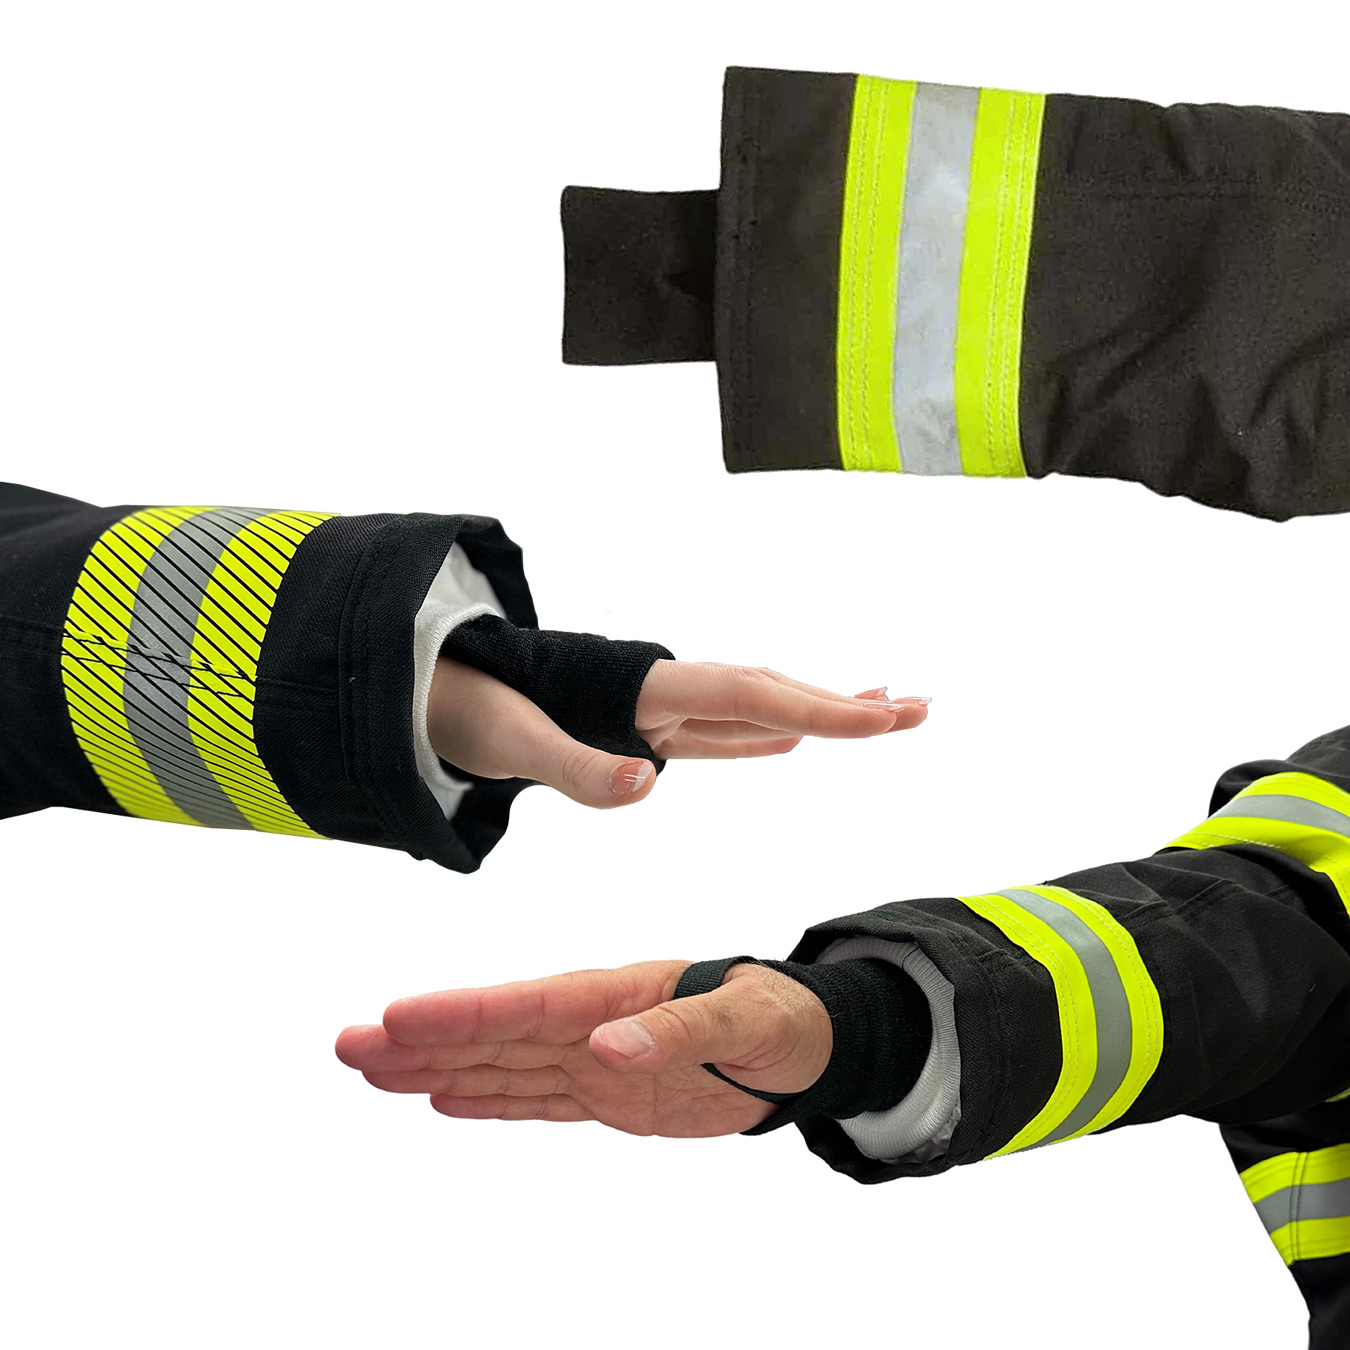 Nomex Wrist Guard Options